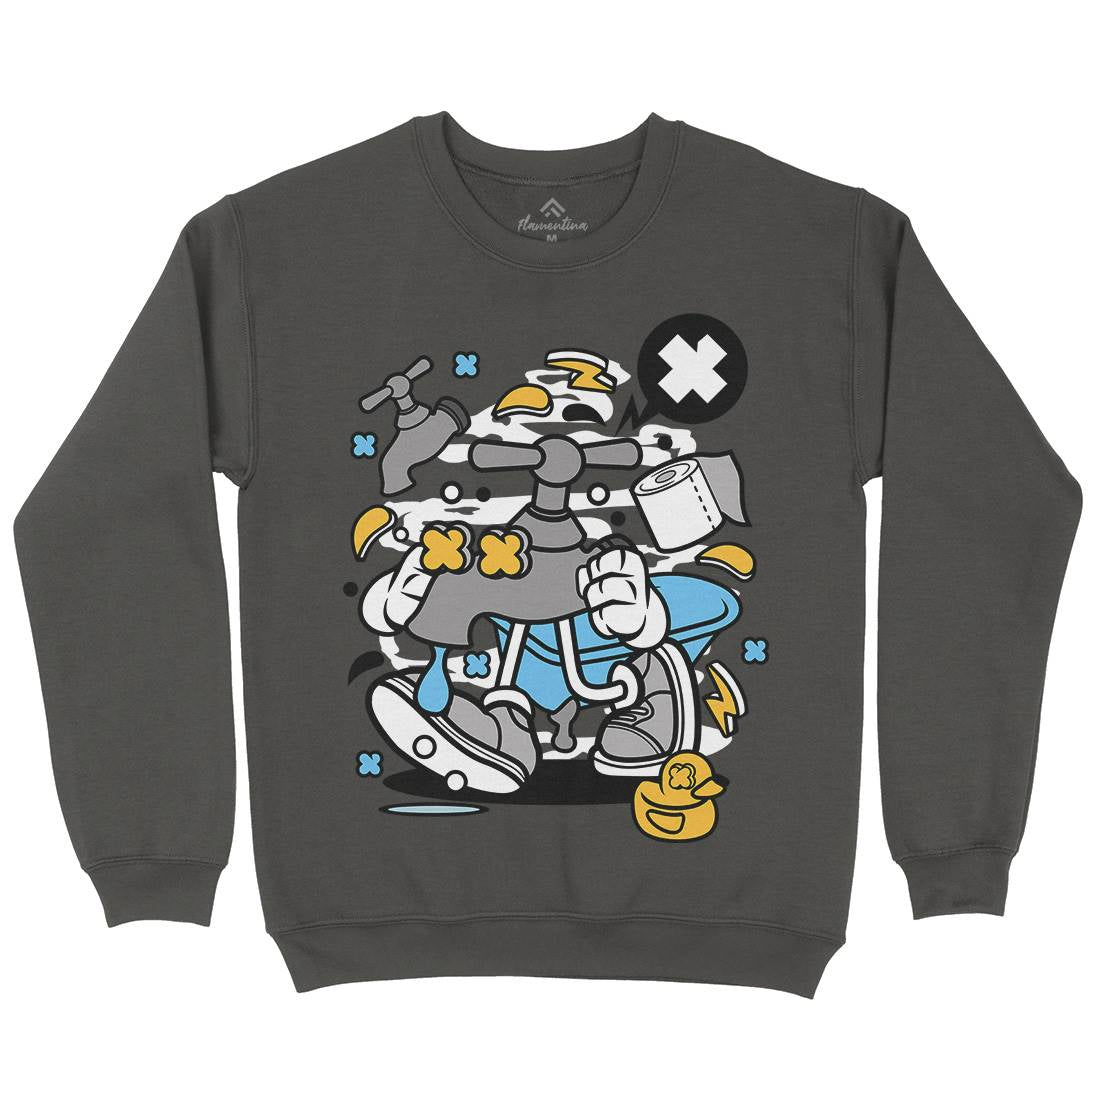 Faucet Kids Crew Neck Sweatshirt Retro C546